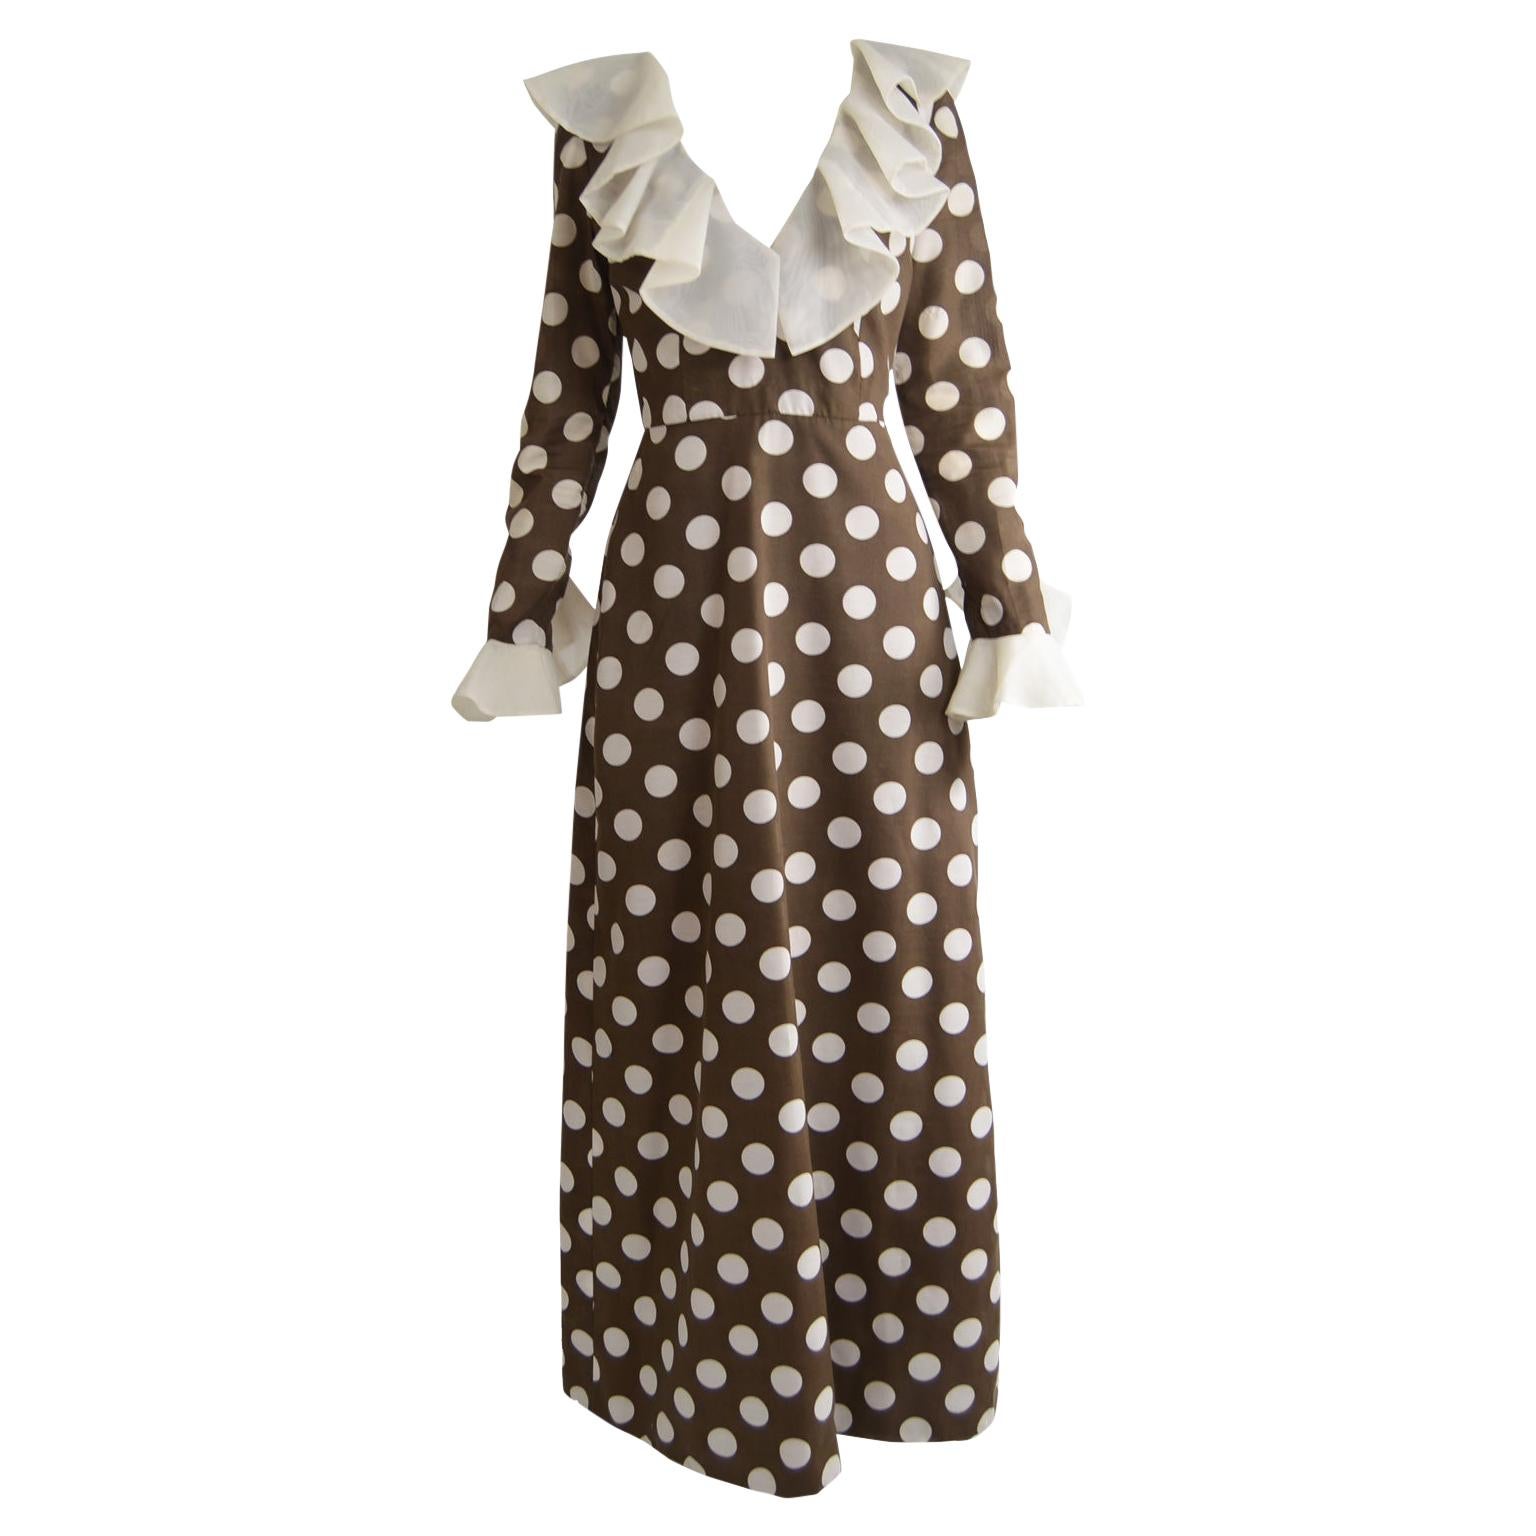 Hershelle Young Mayfair Brown Polka Dot Print Organza Collar Maxi Dress, 1960s